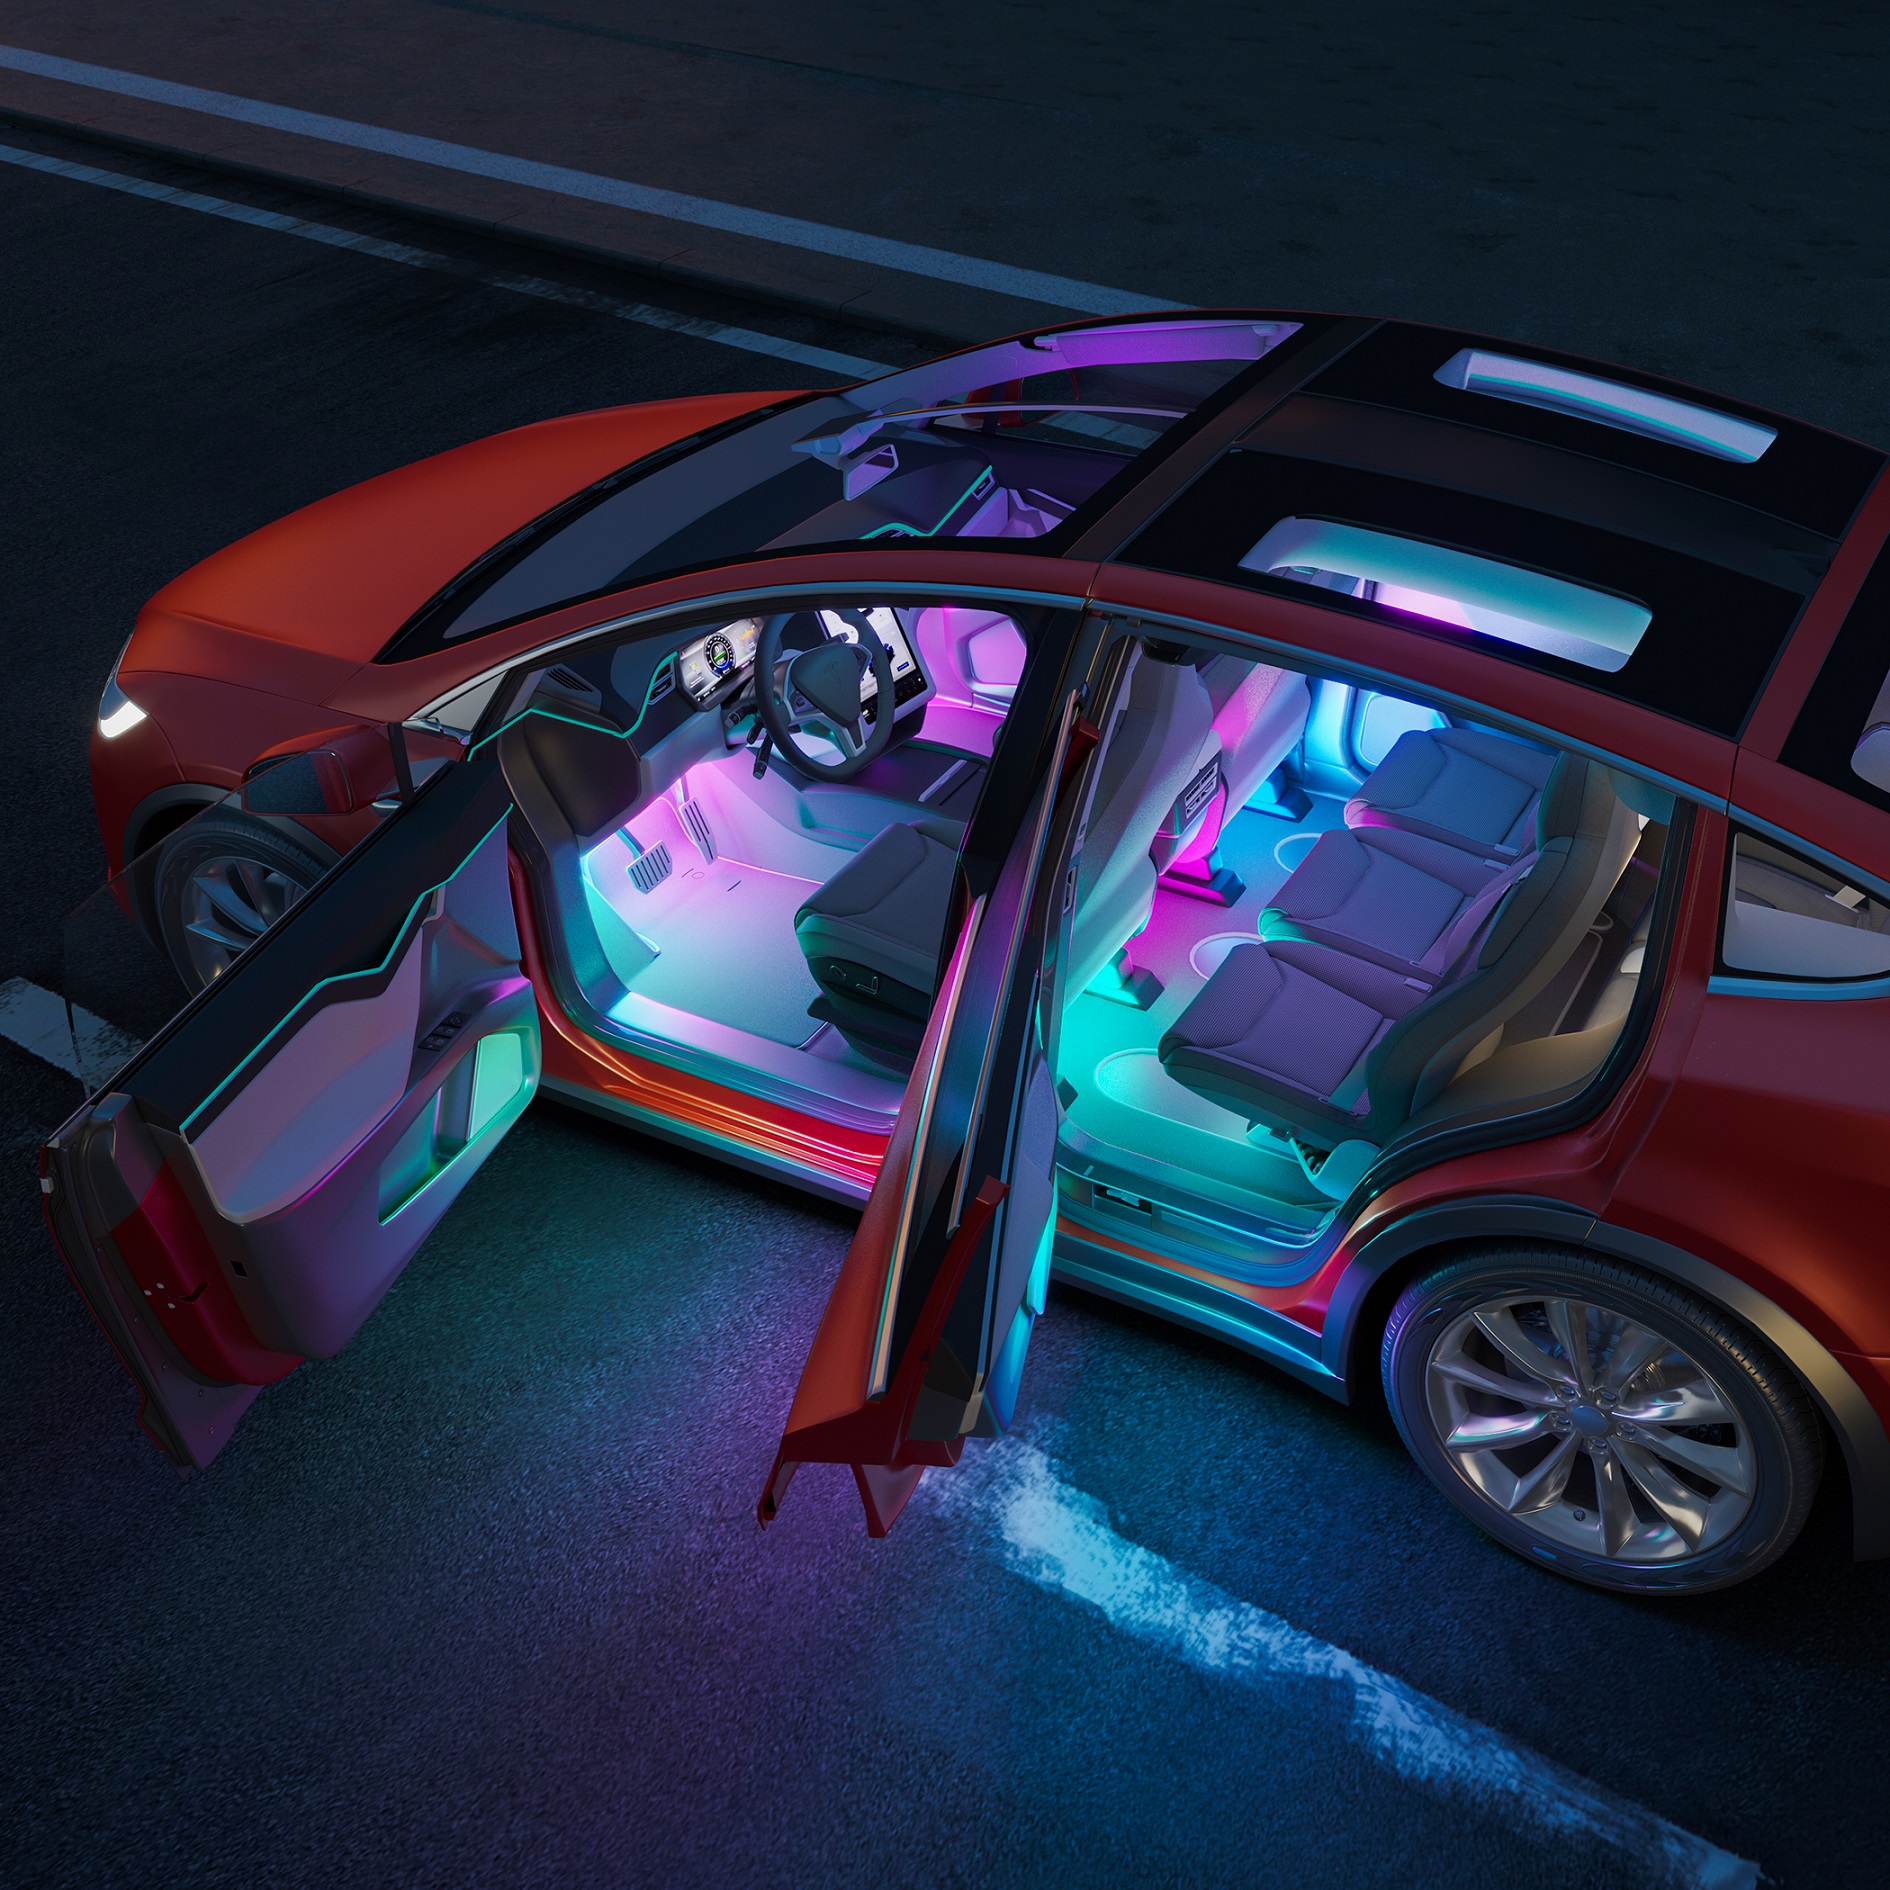 Govee Interior LED Car Light 48-in Smart Plug-in LED Under Cabinet Strip  Light at